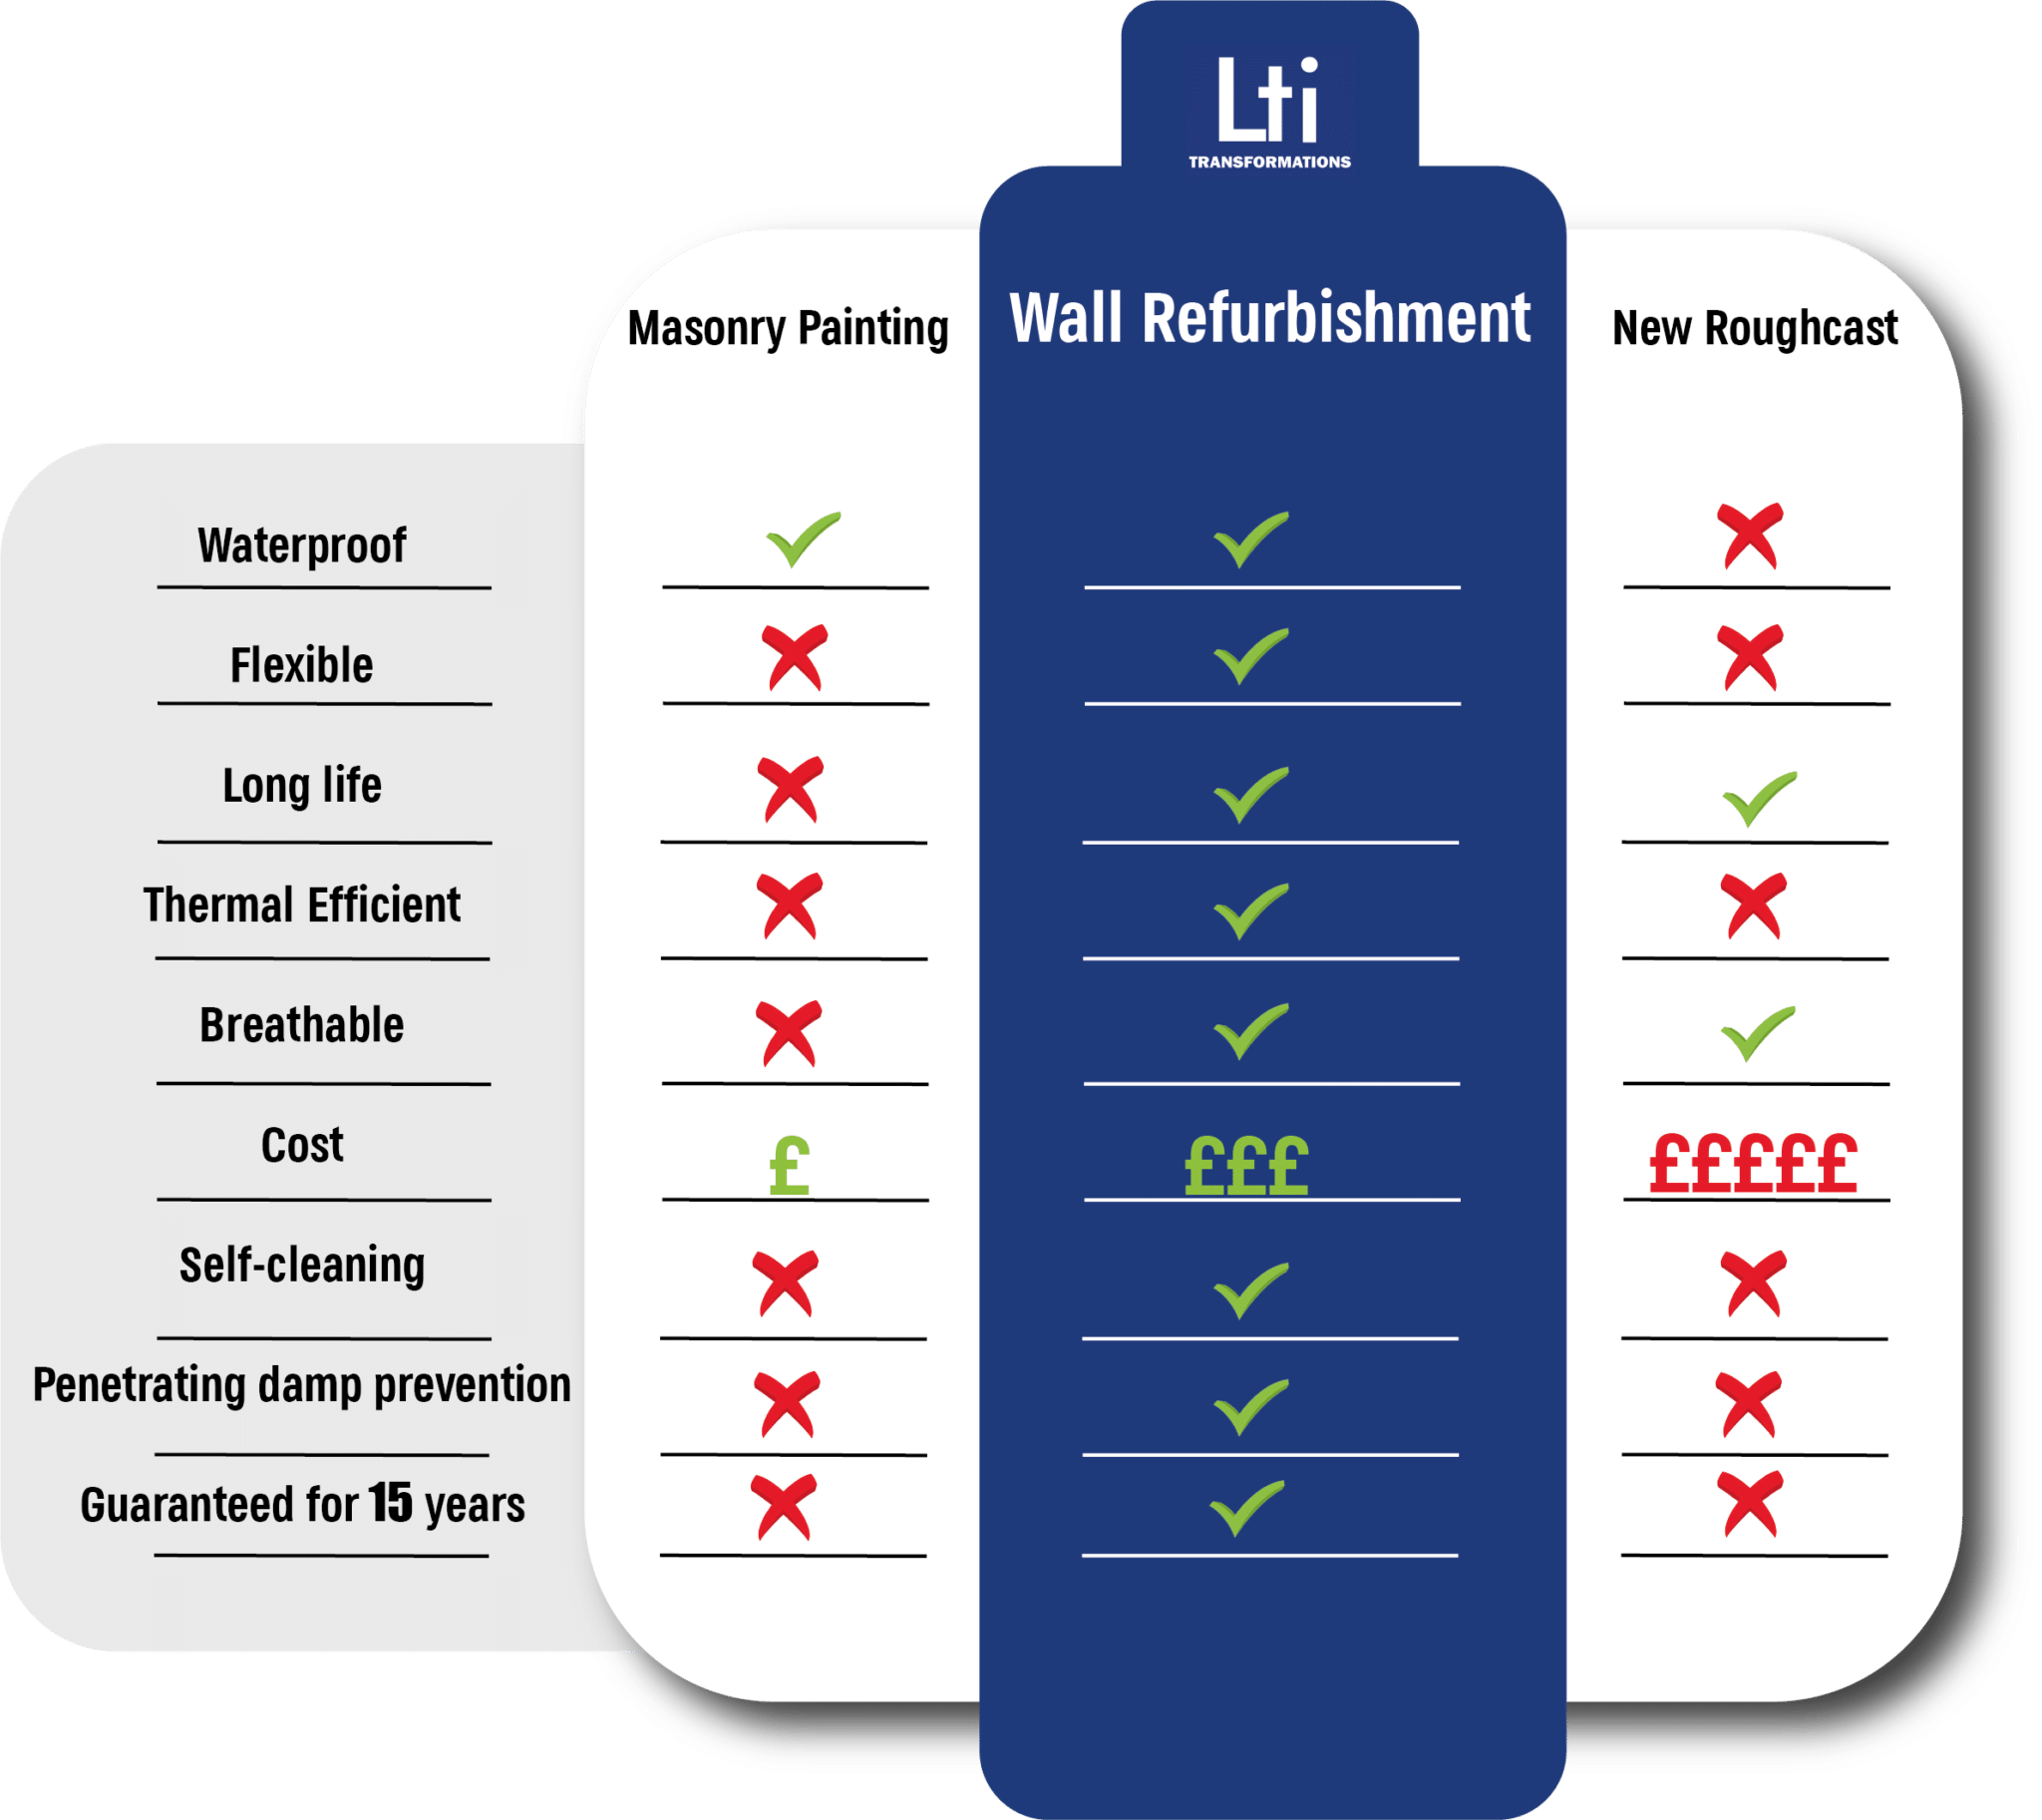 comparing wall refurbishment vs other options